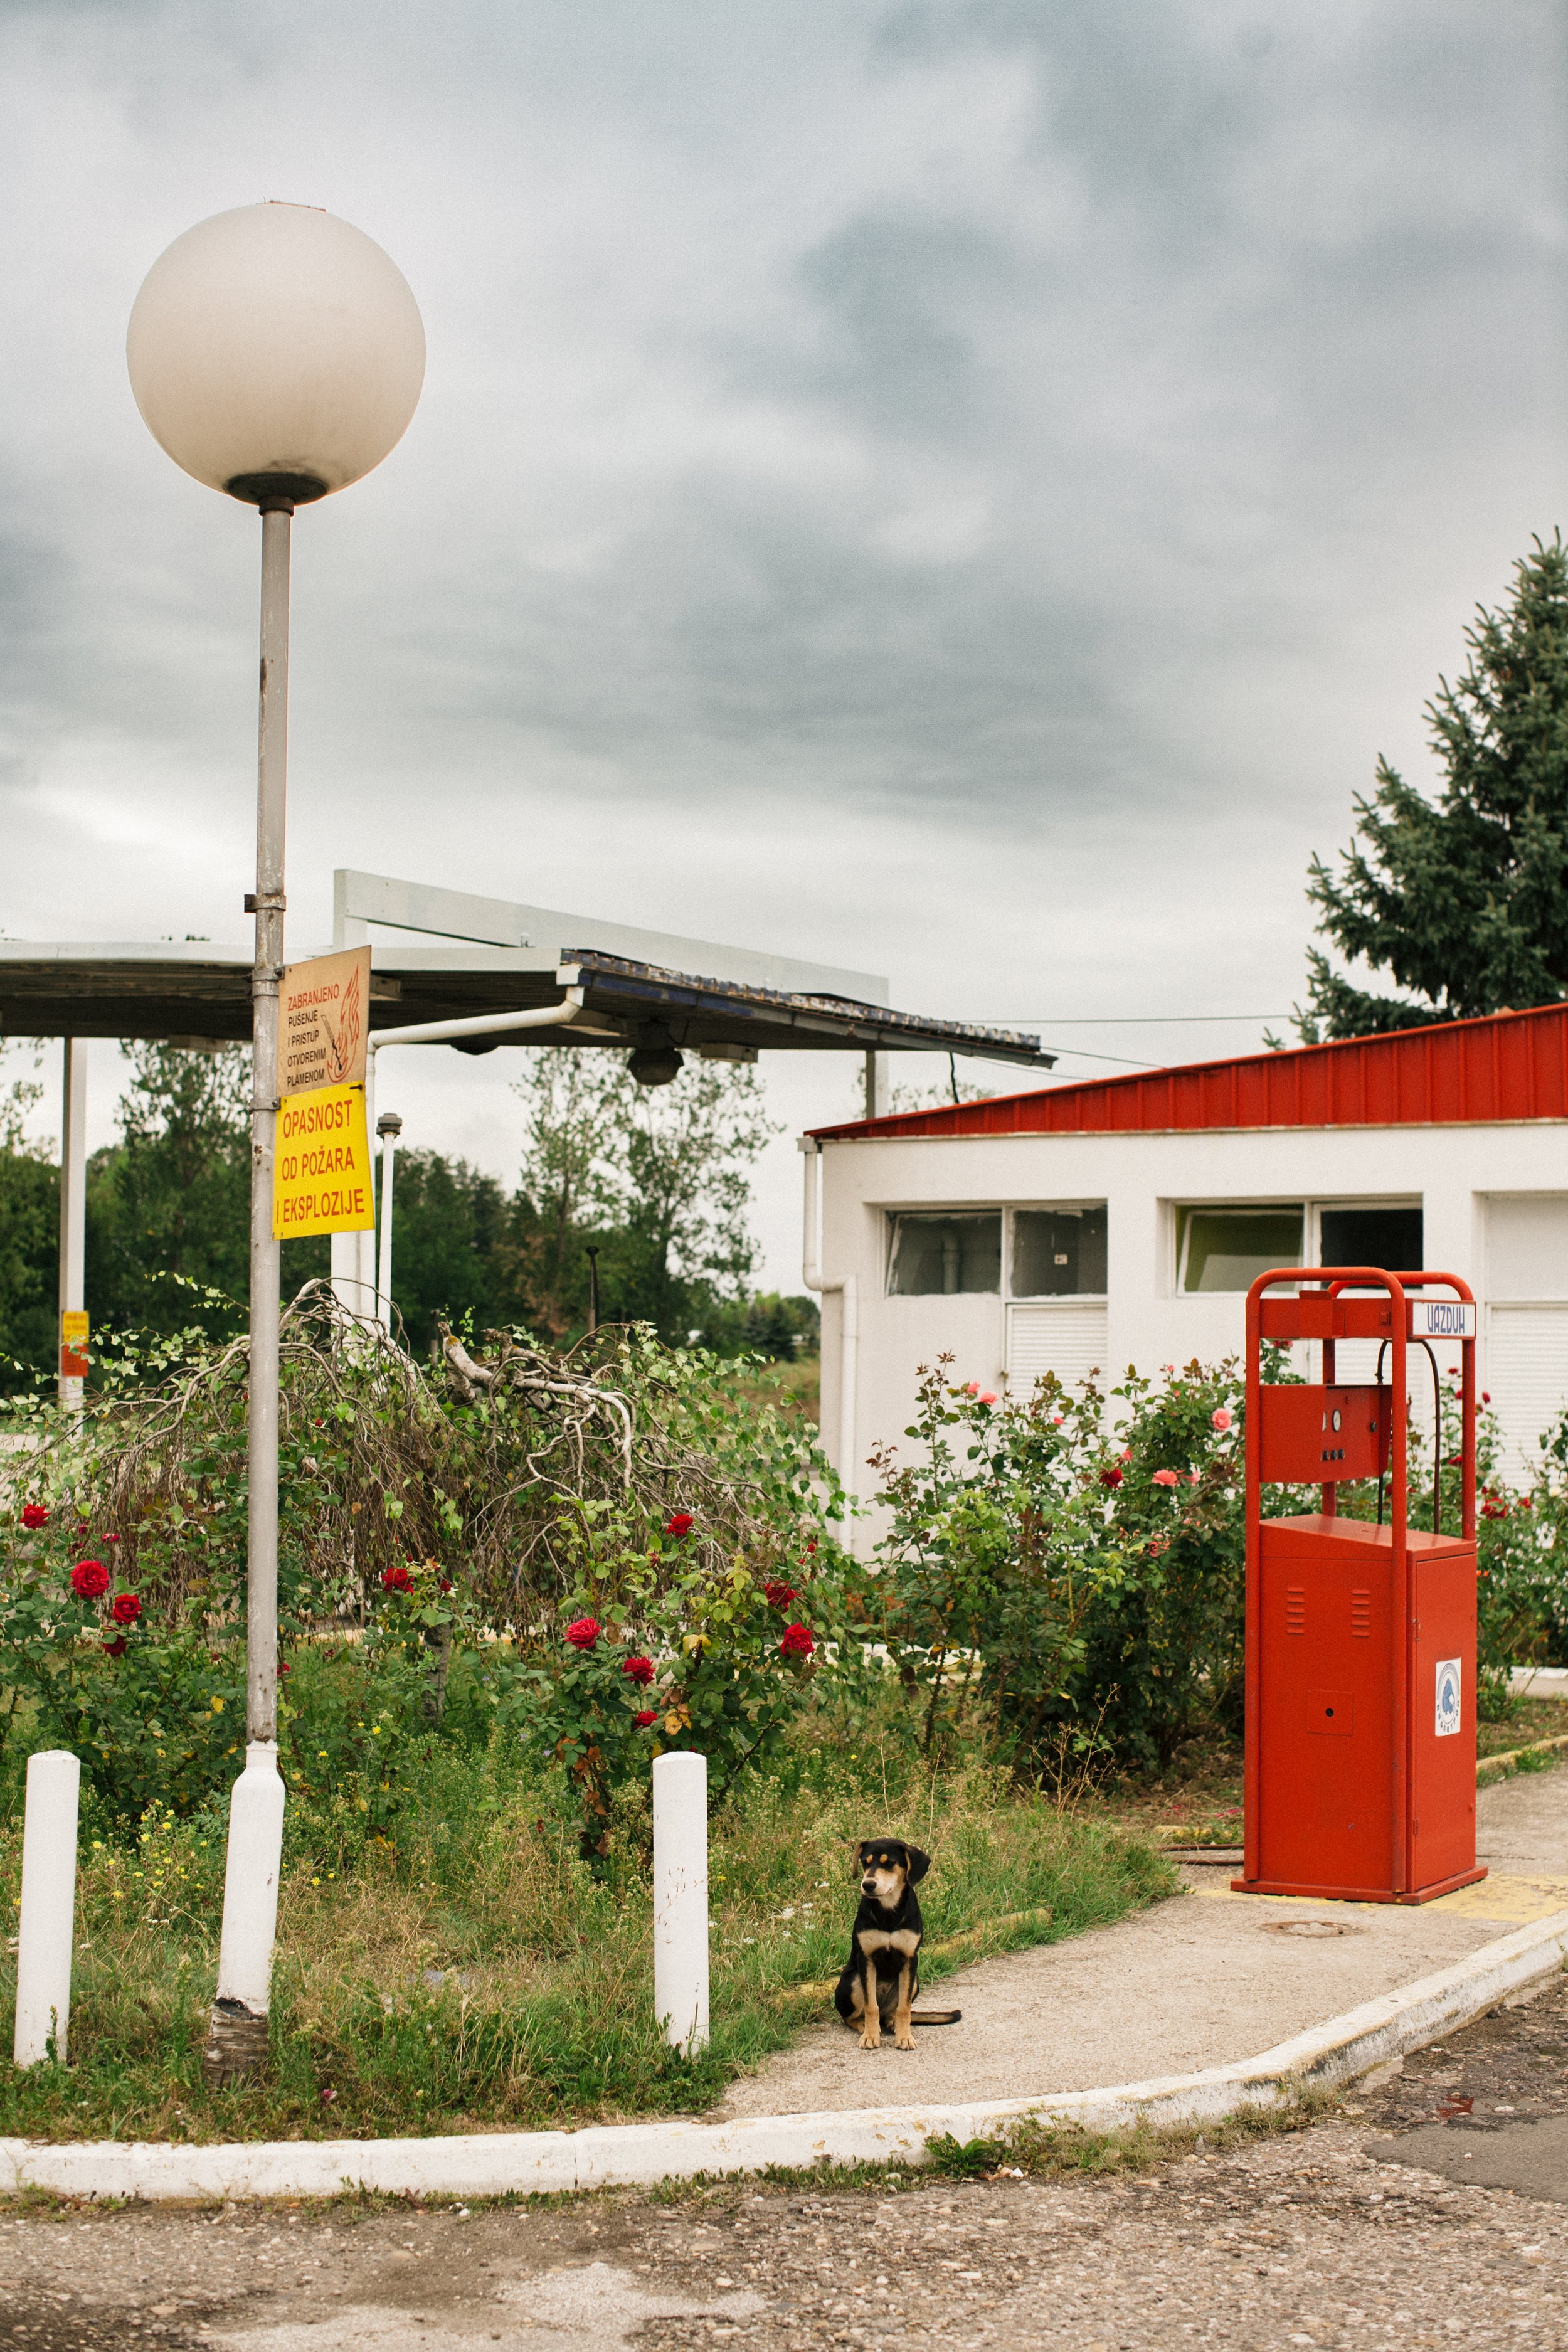   Gas station, Dog, Roses   Serbia-Croatia border (Slavonski Šamac), 2009 